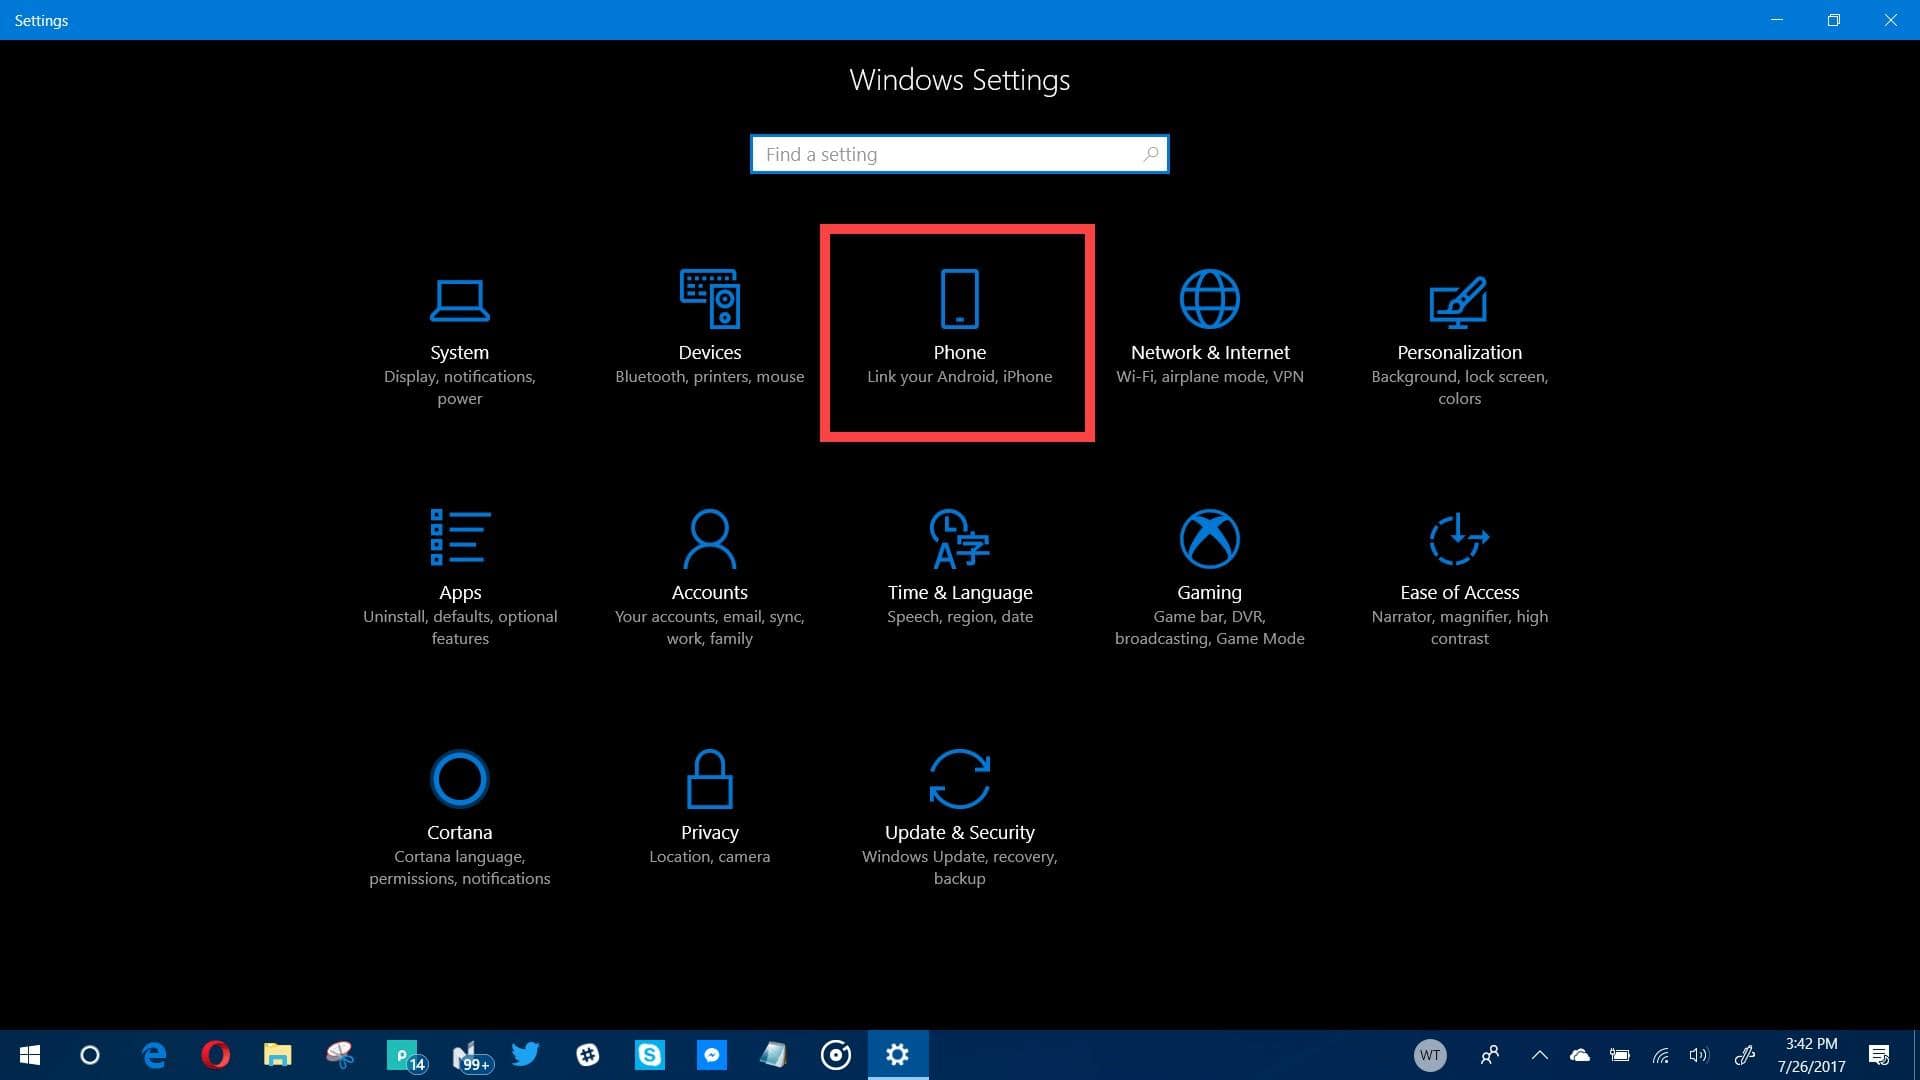 Windows 10 Creators update settings menu